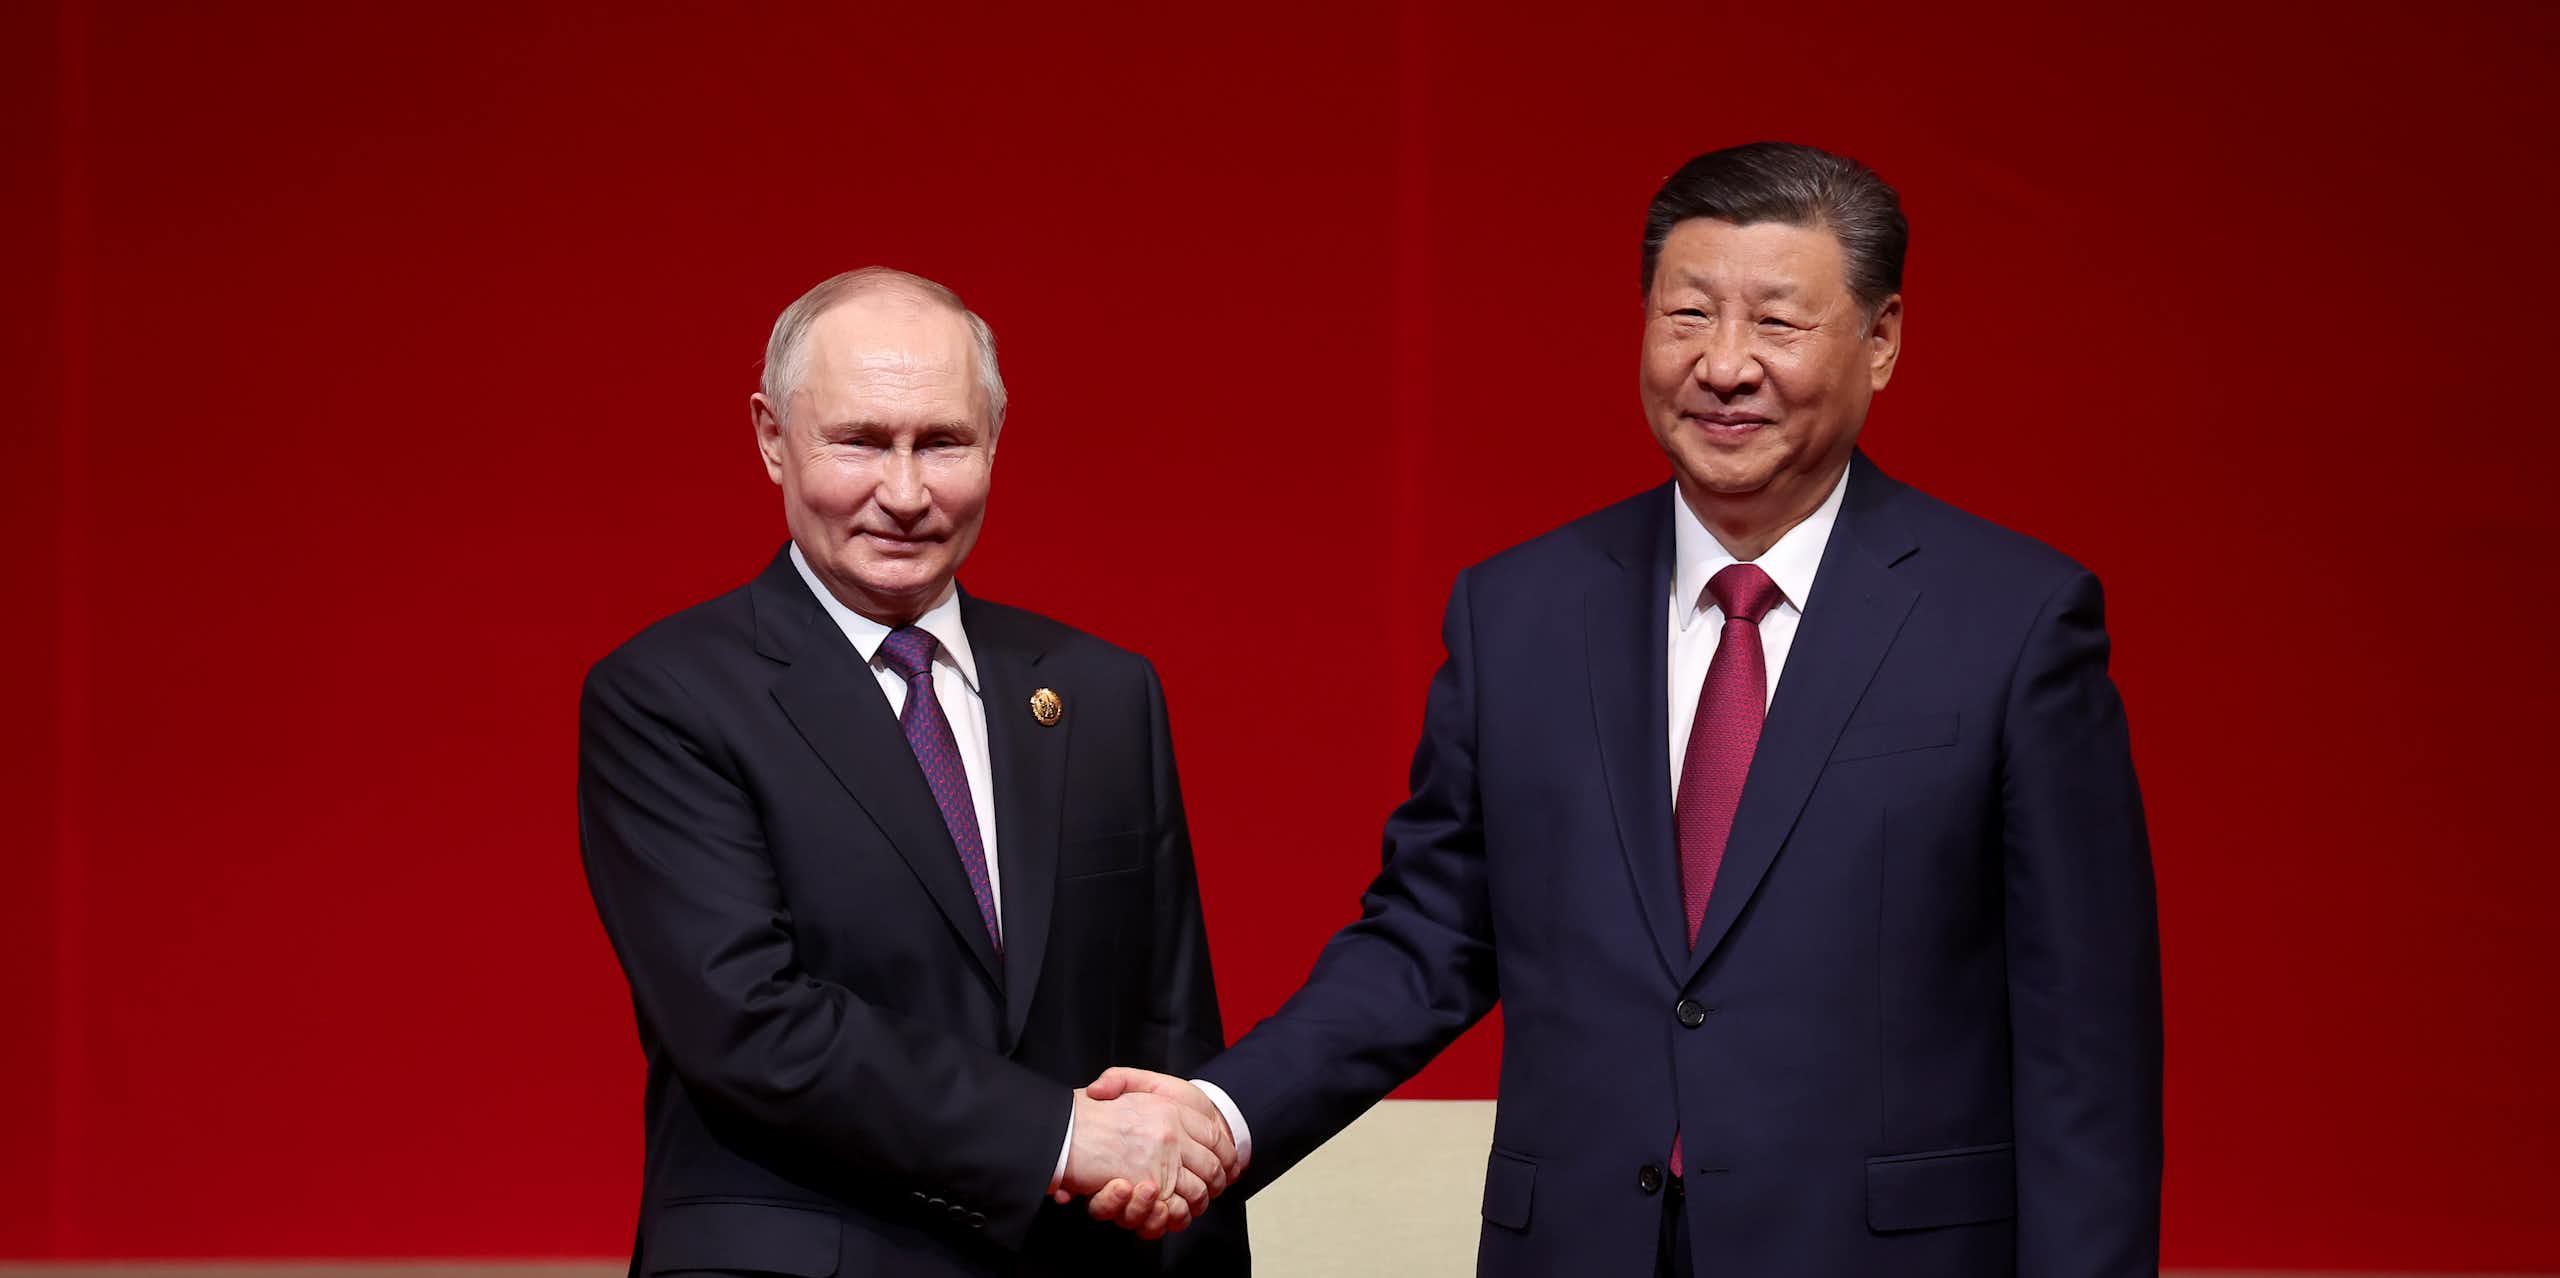 Presidents Putin and Xi shake hands.